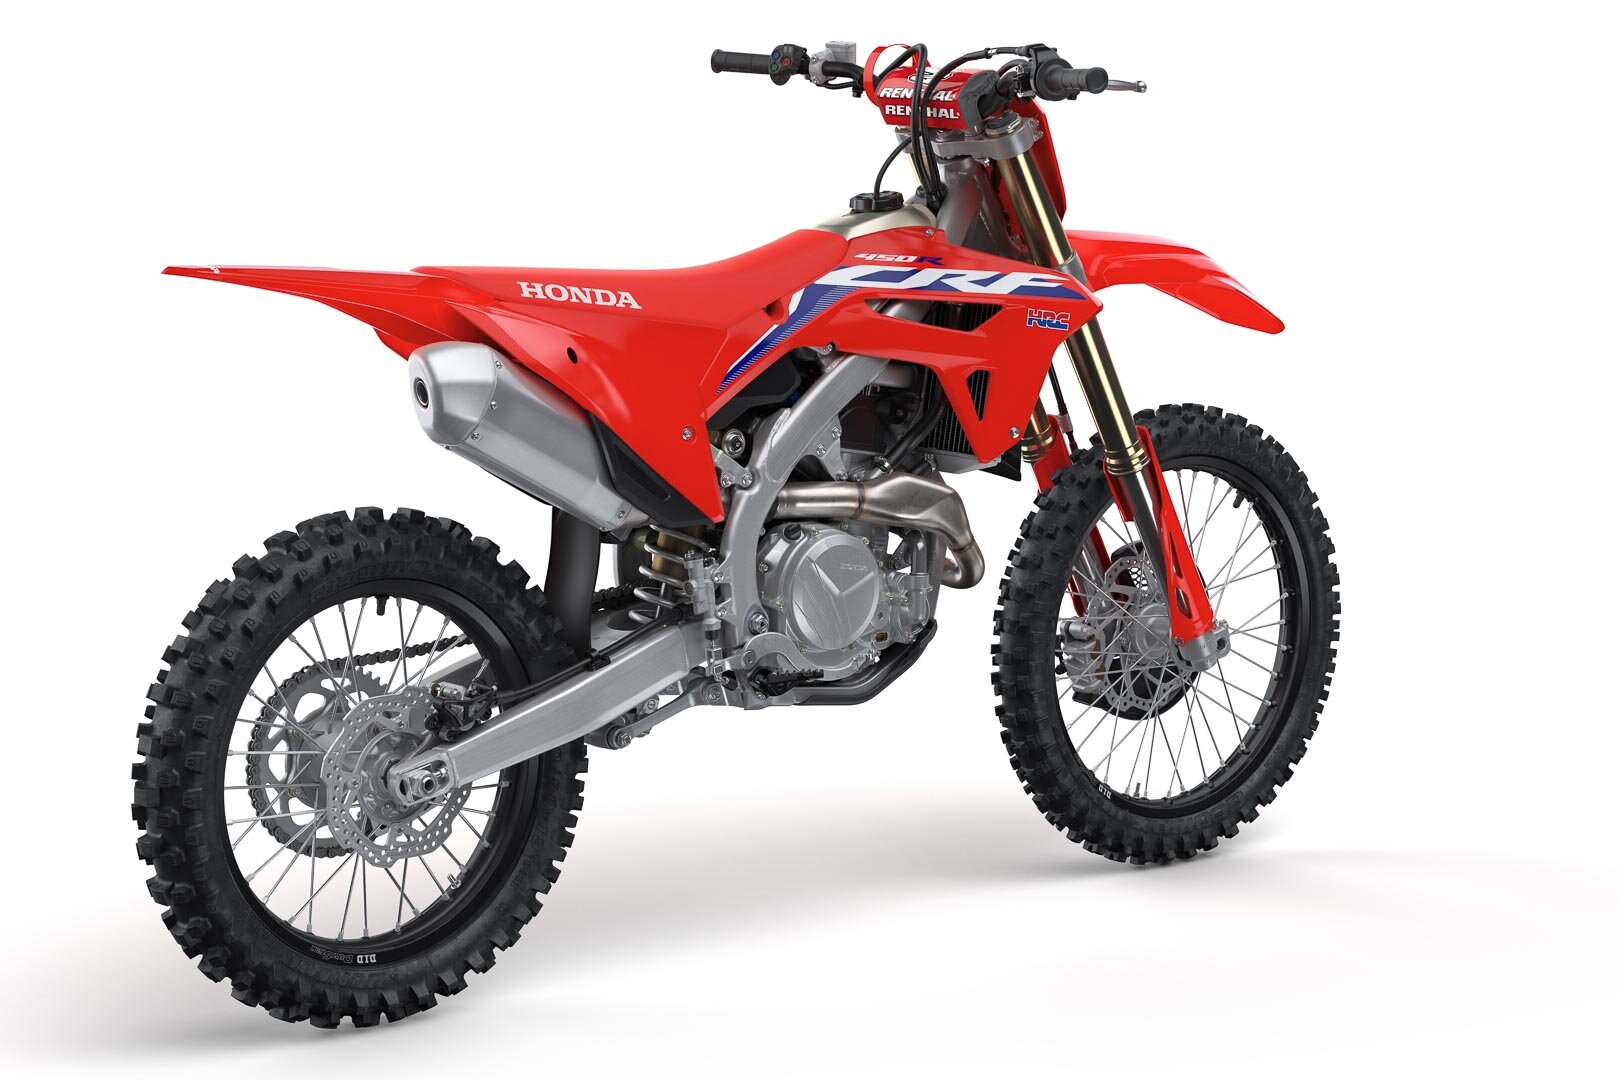 2021-Honda-CRF450R-First-Look-motocross-supercross-motorcycle-10.jpg